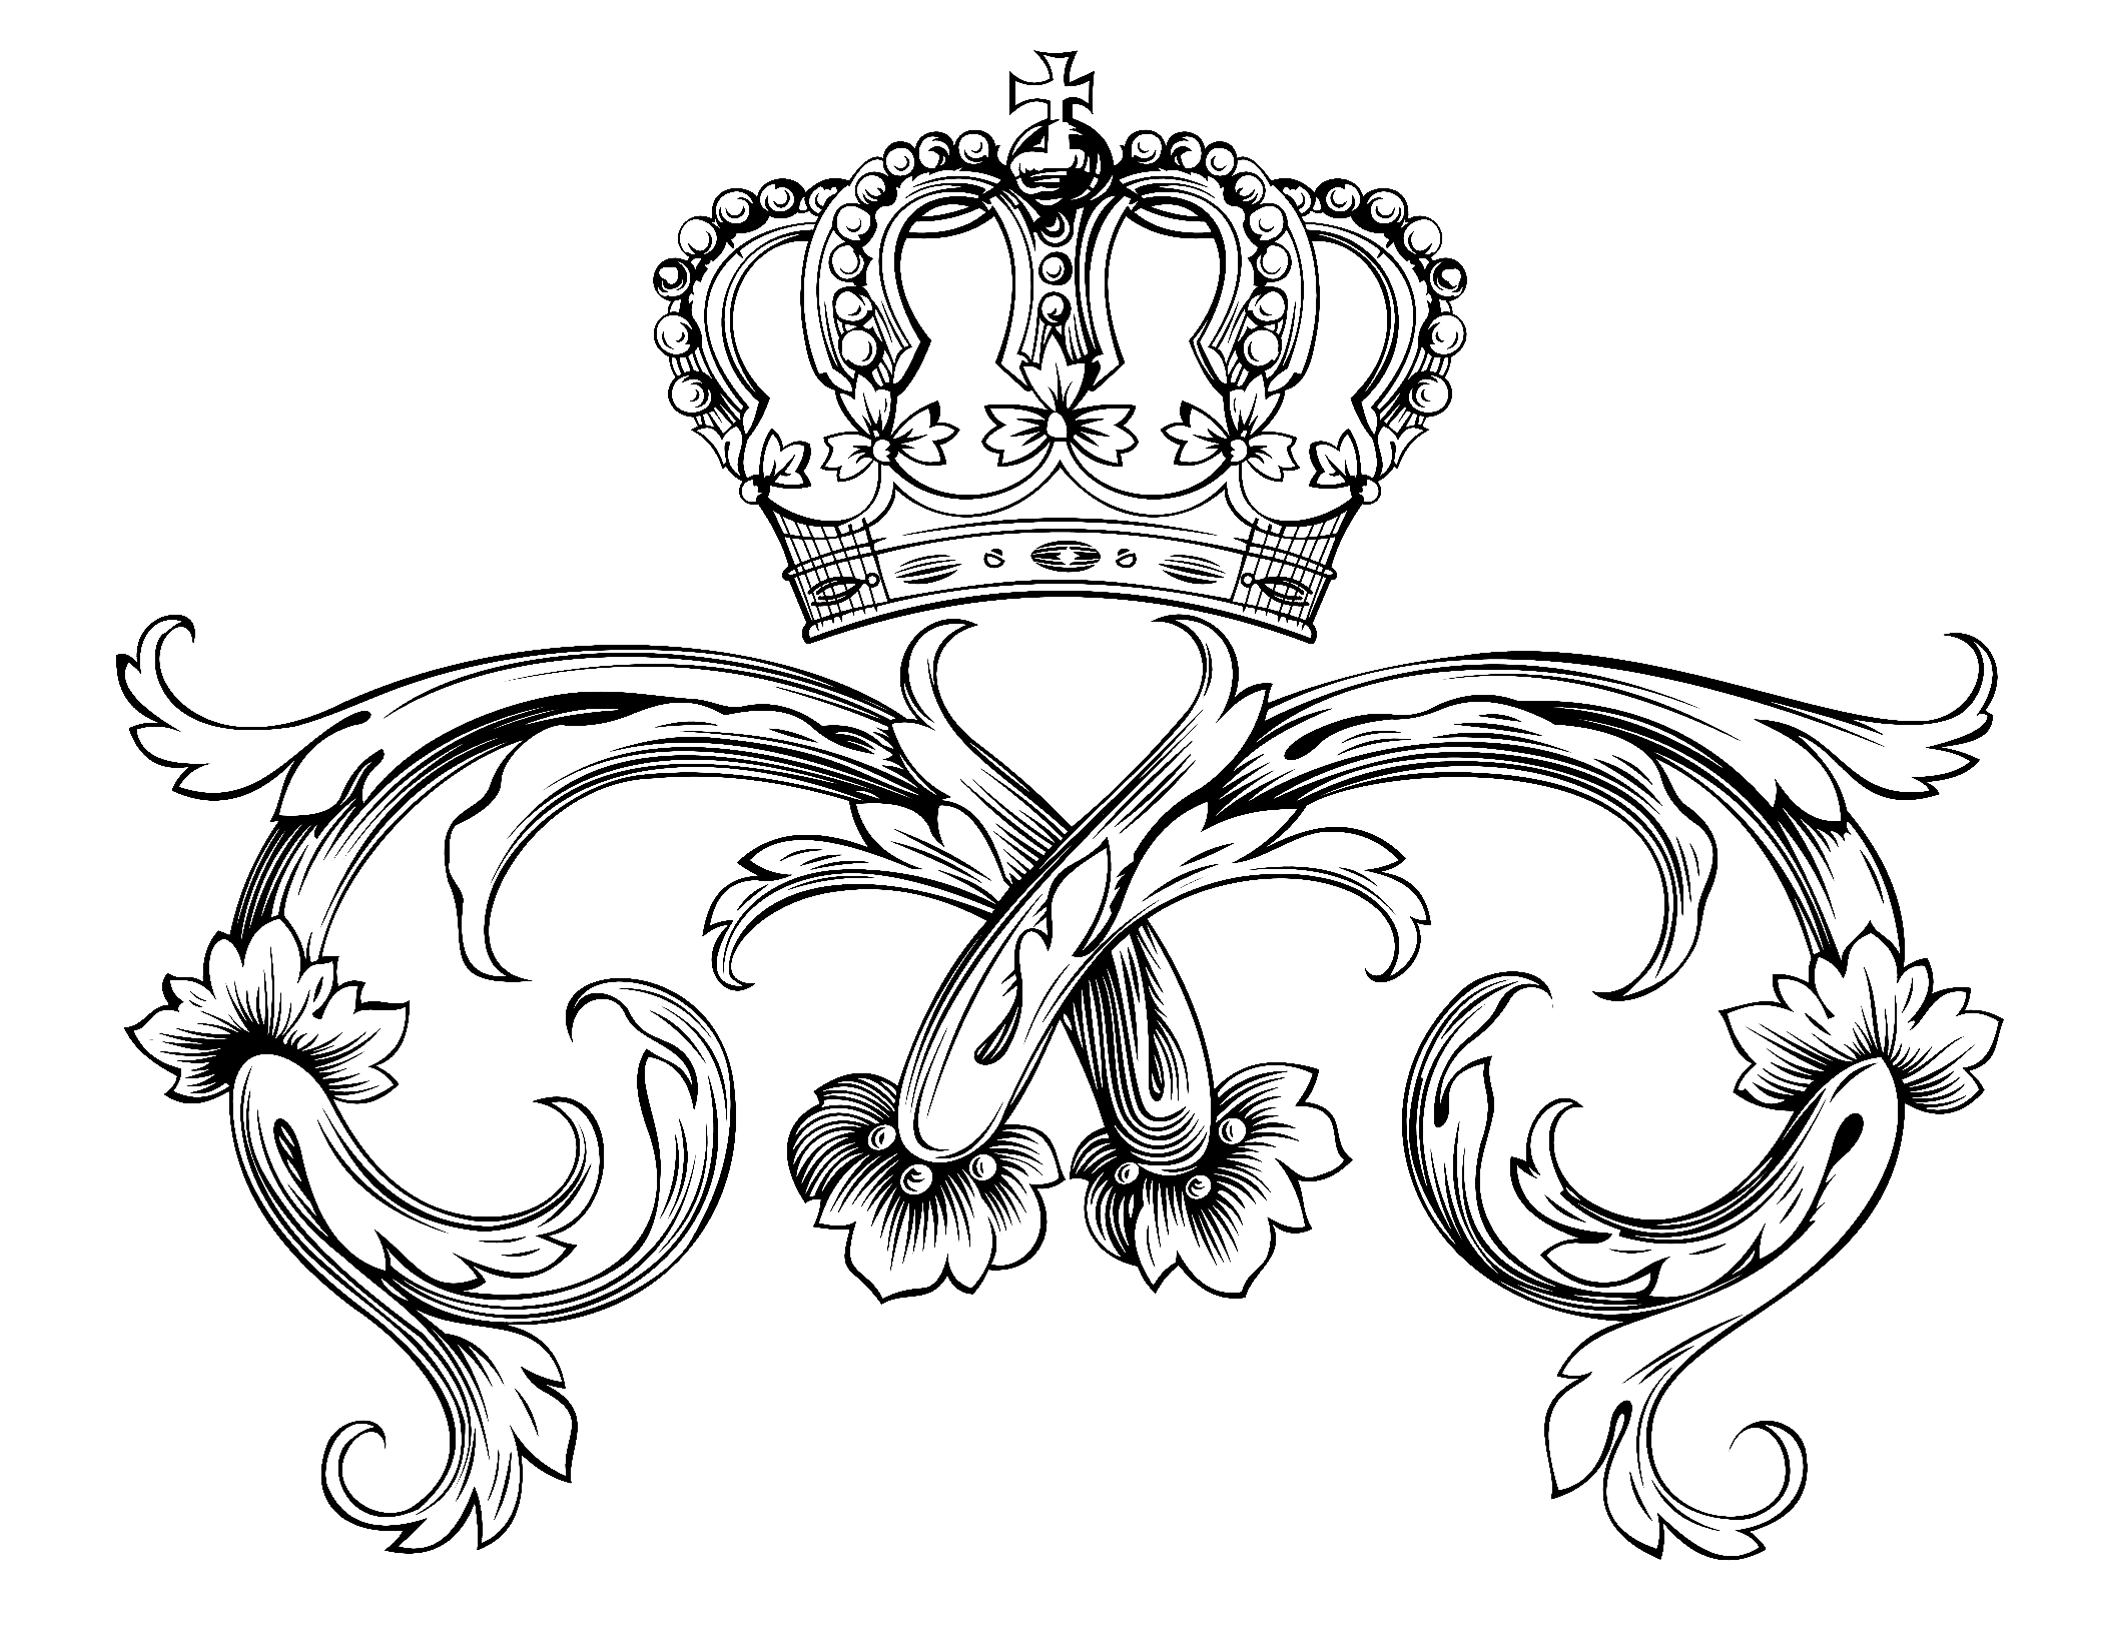 Symbole royal majestueux, Artiste : Dl1on   Source : 123rf